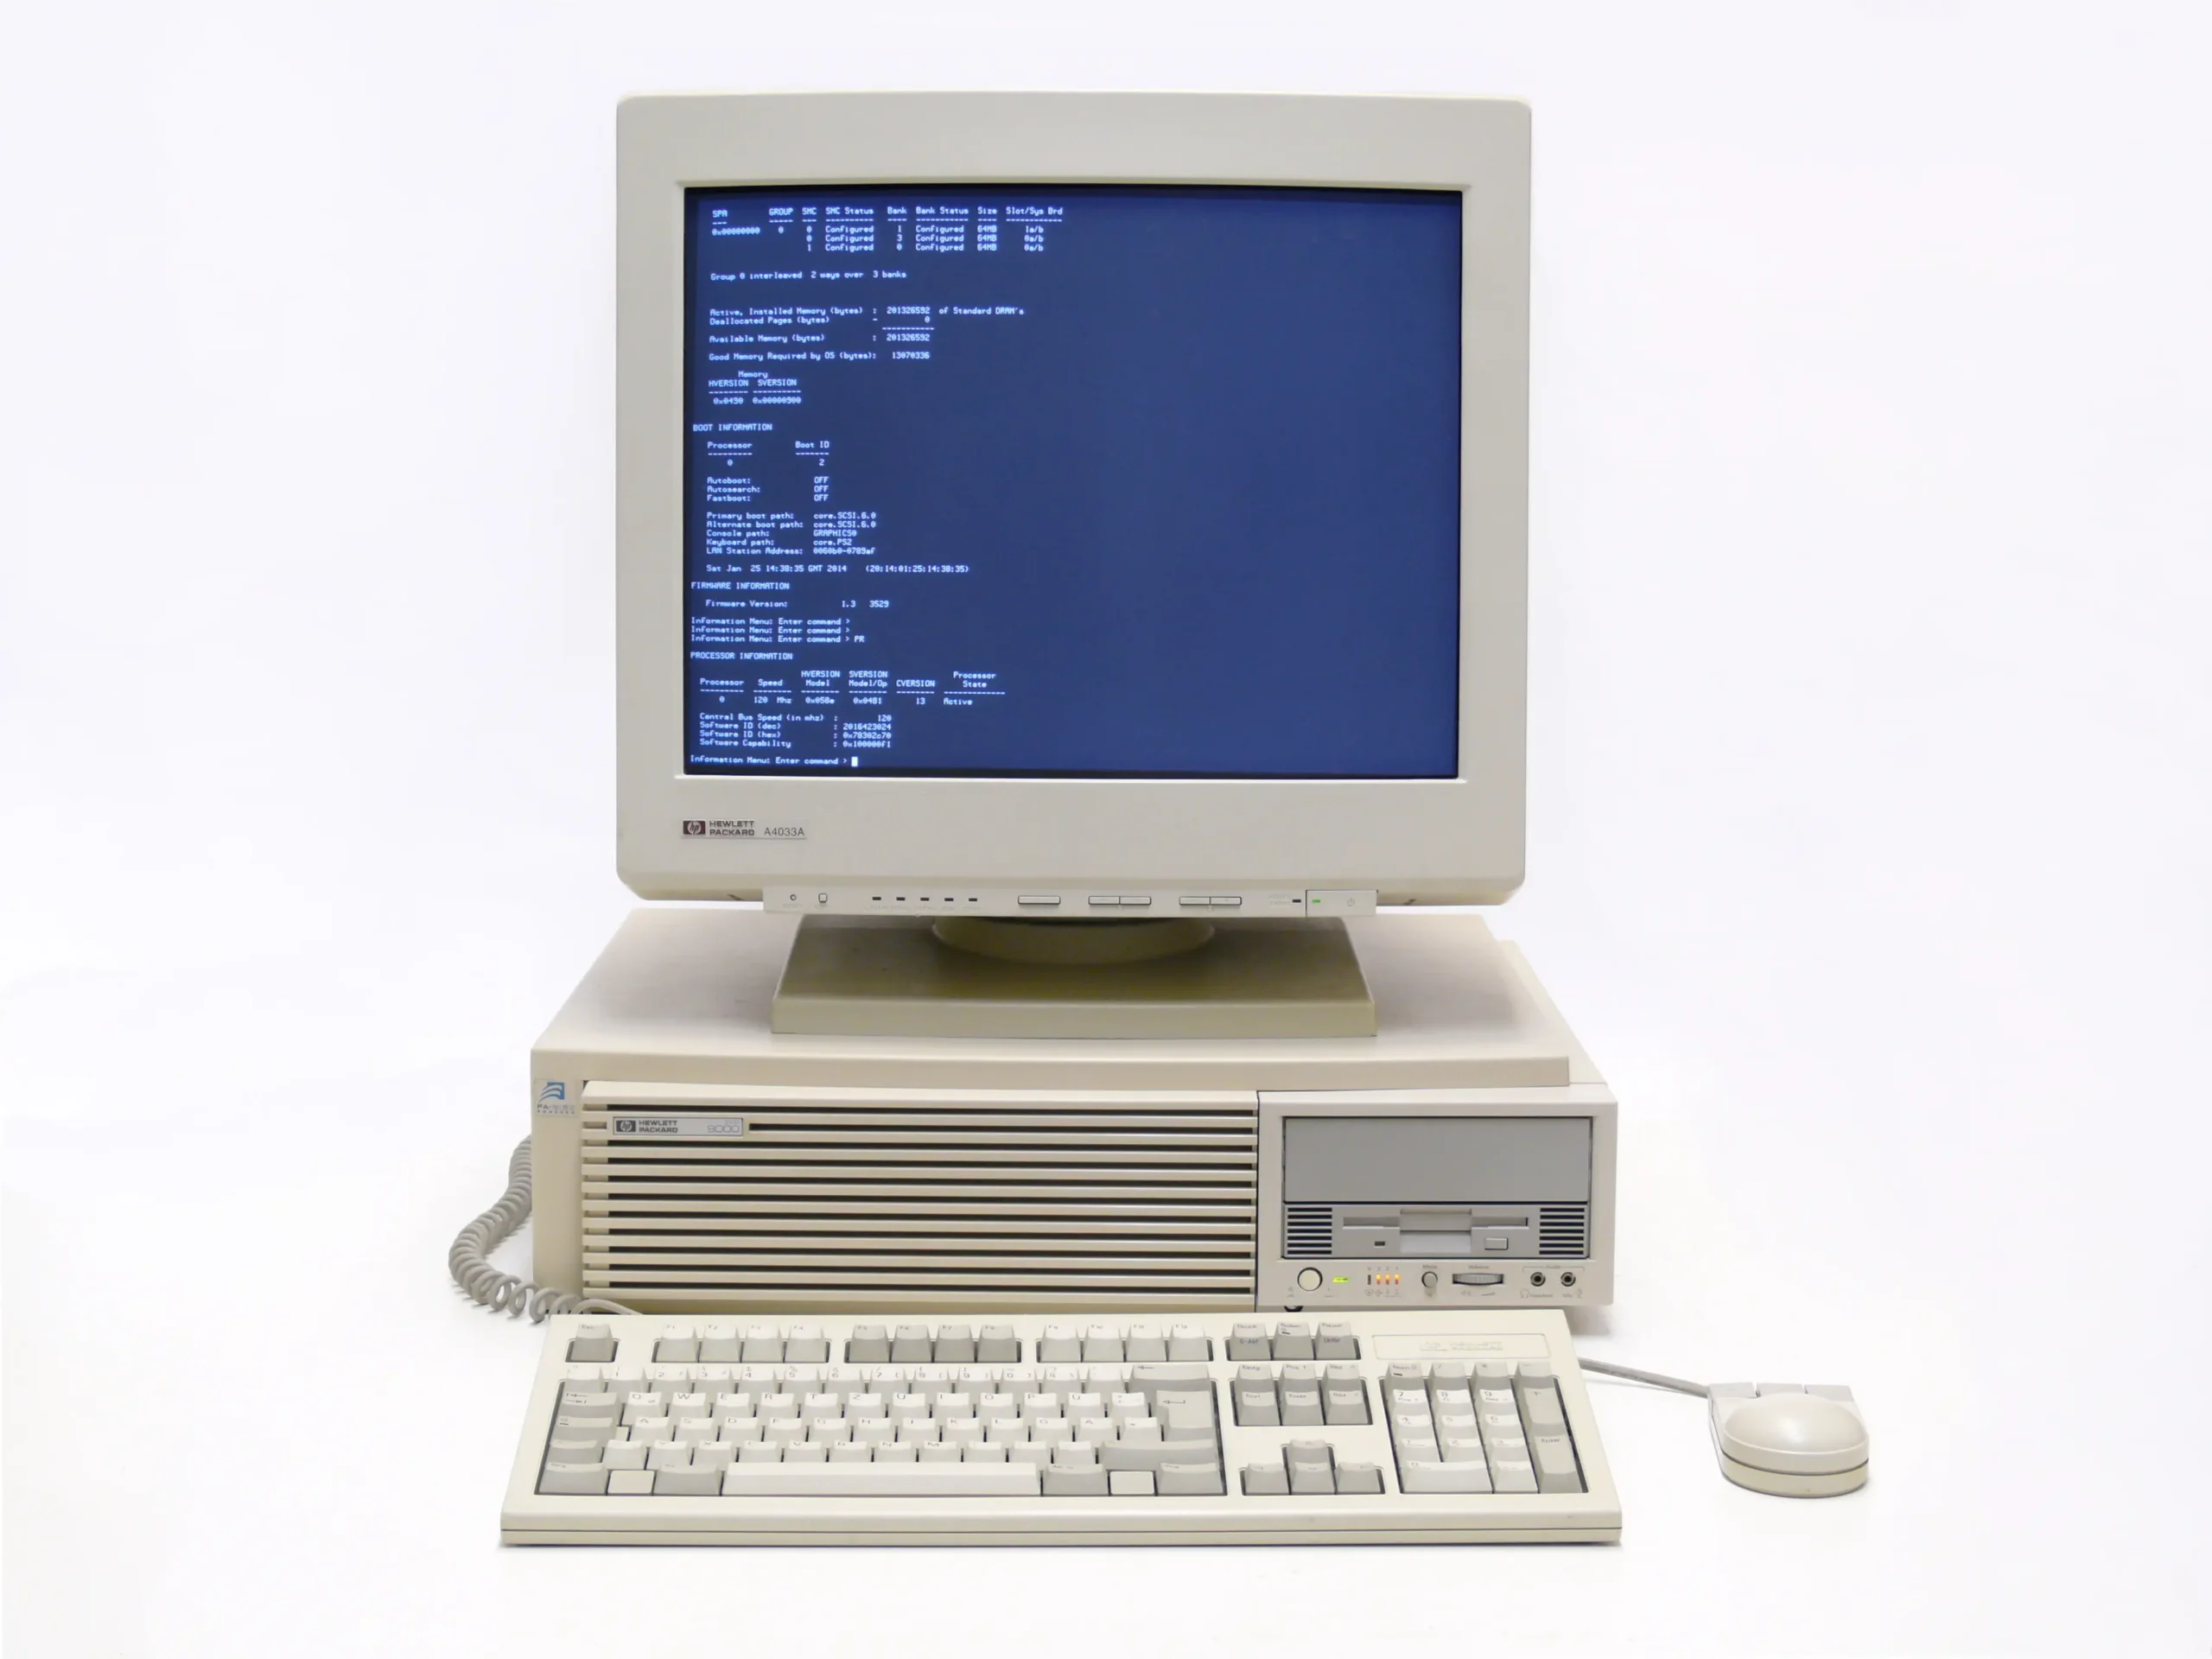 1995 hewlett packard computer - What were computers like in 1995